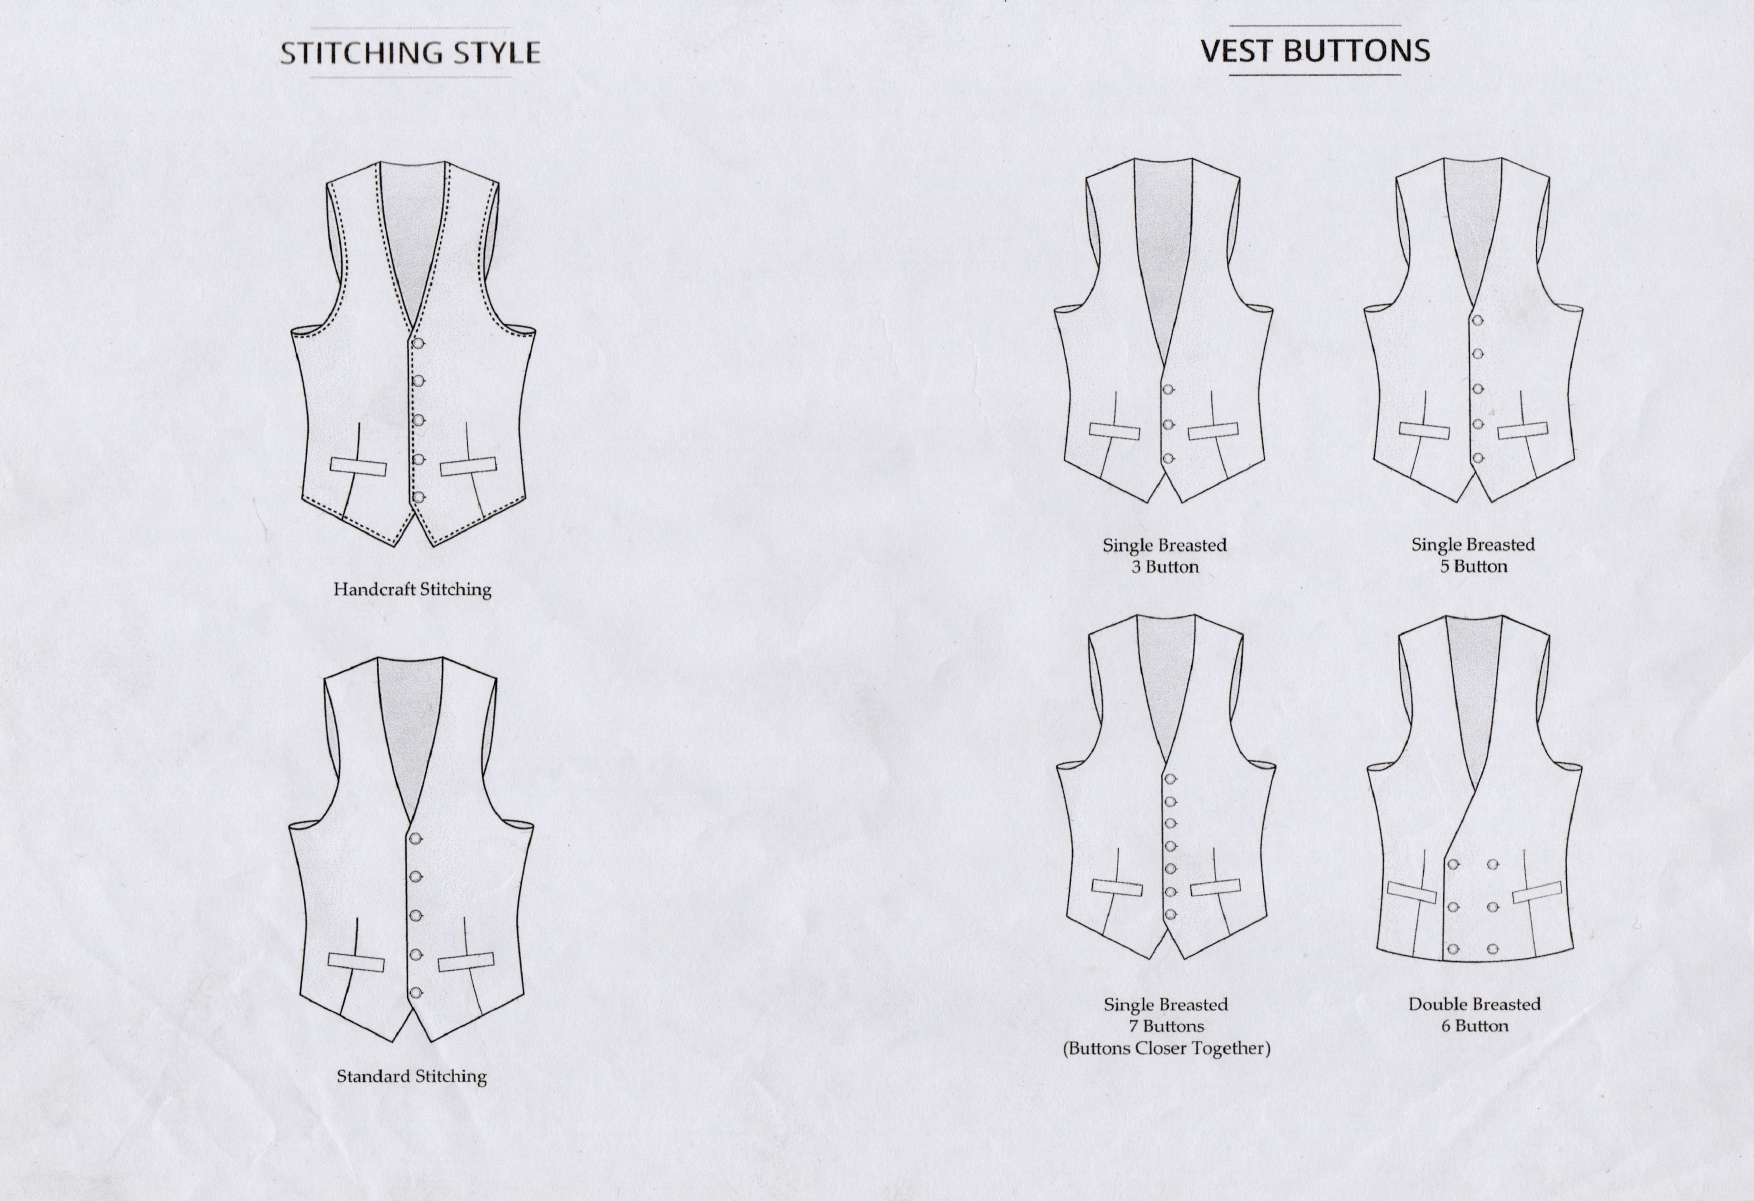 Vest Style Options